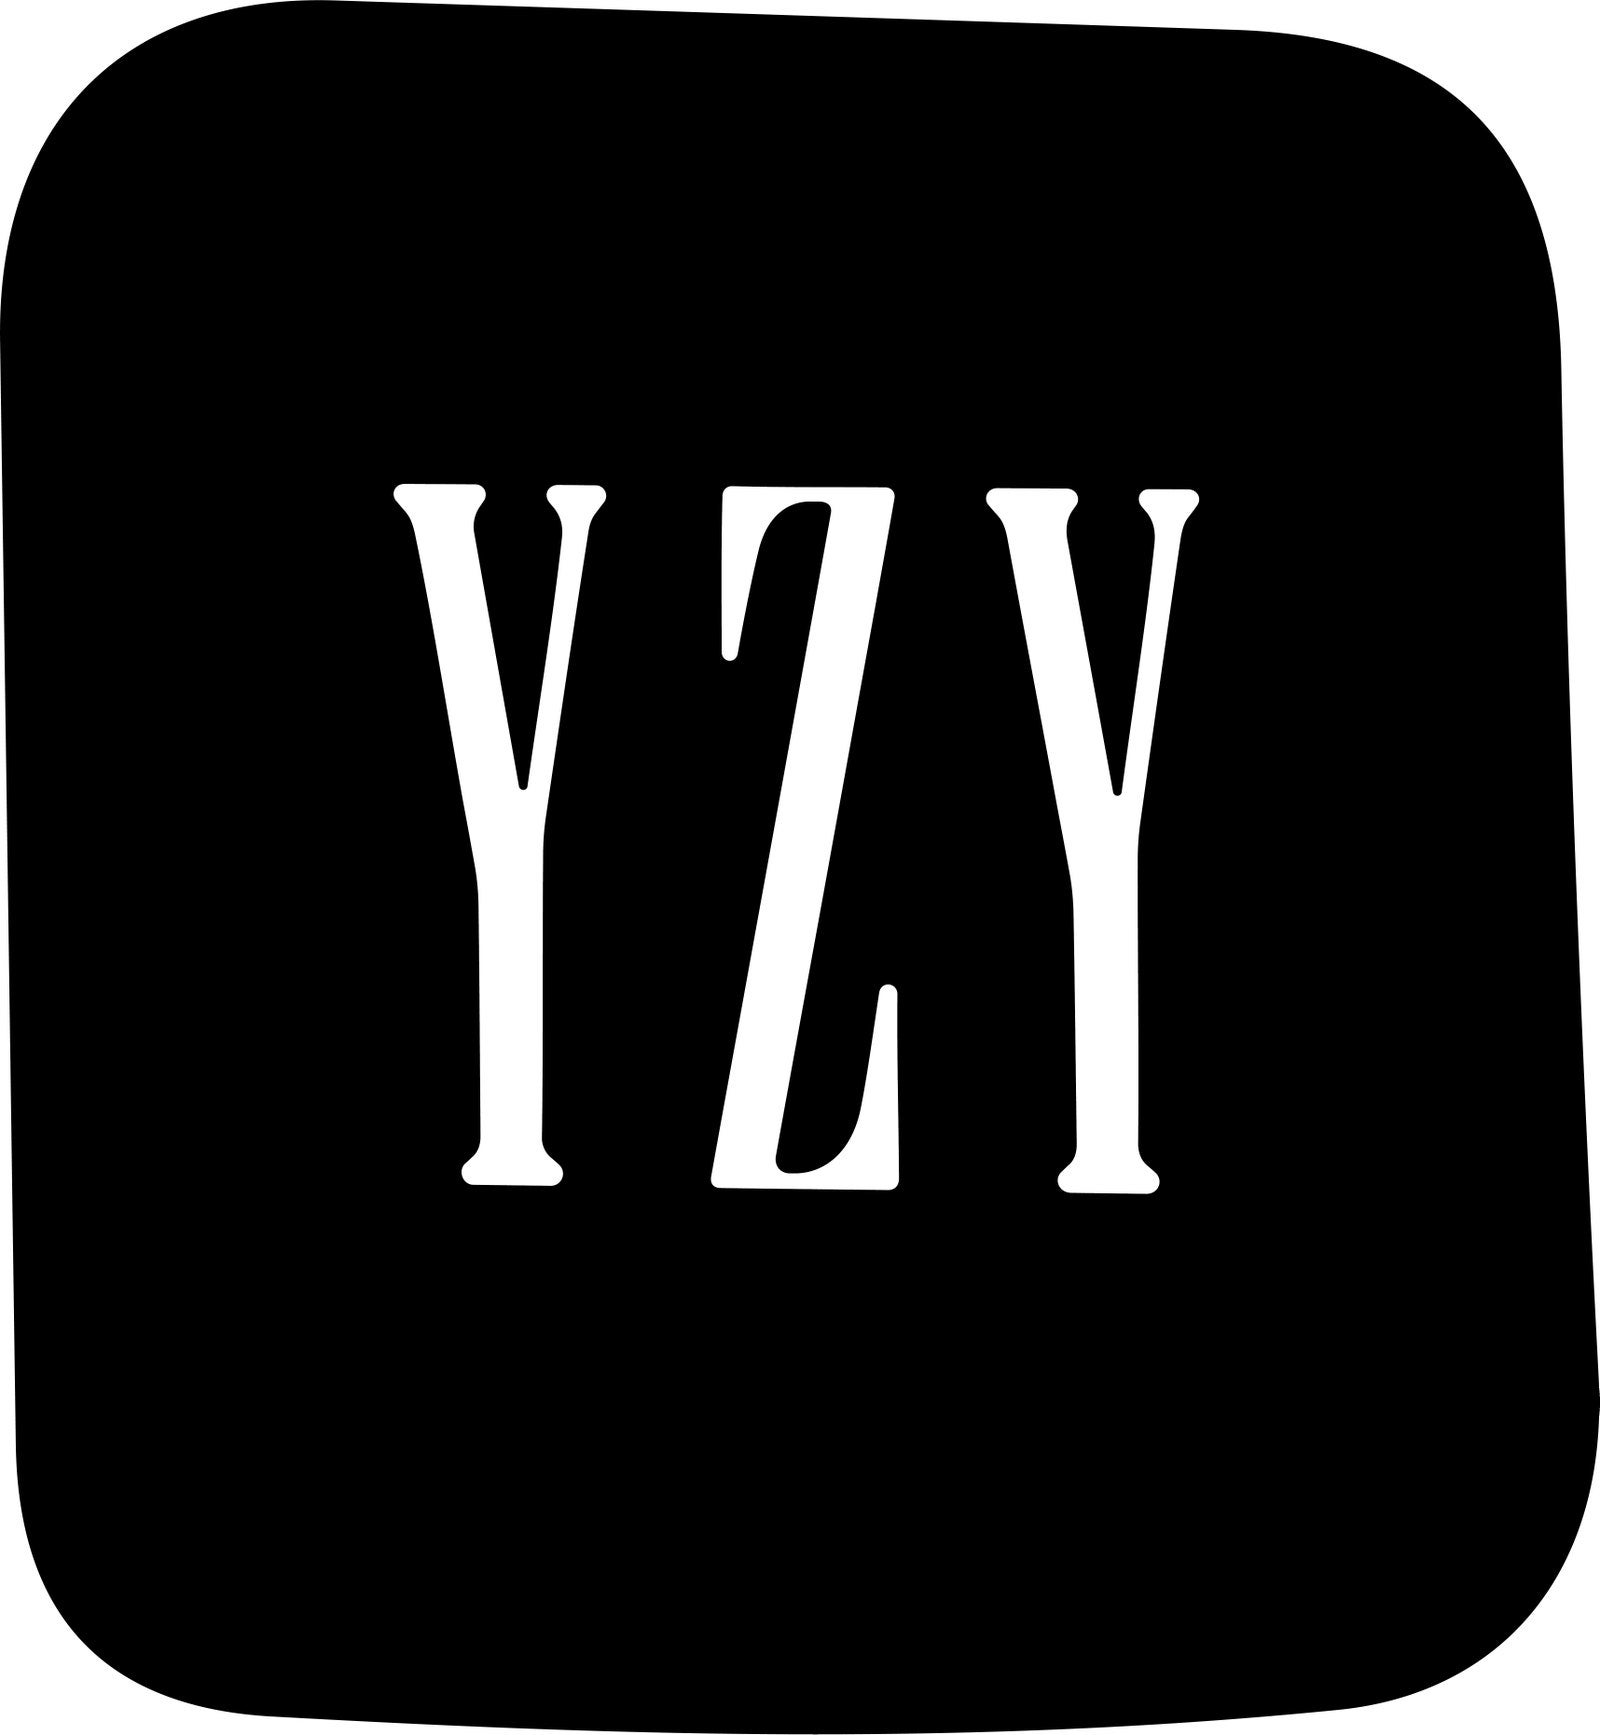 The logo for Yeezy Gap Engineered by Balenciaga